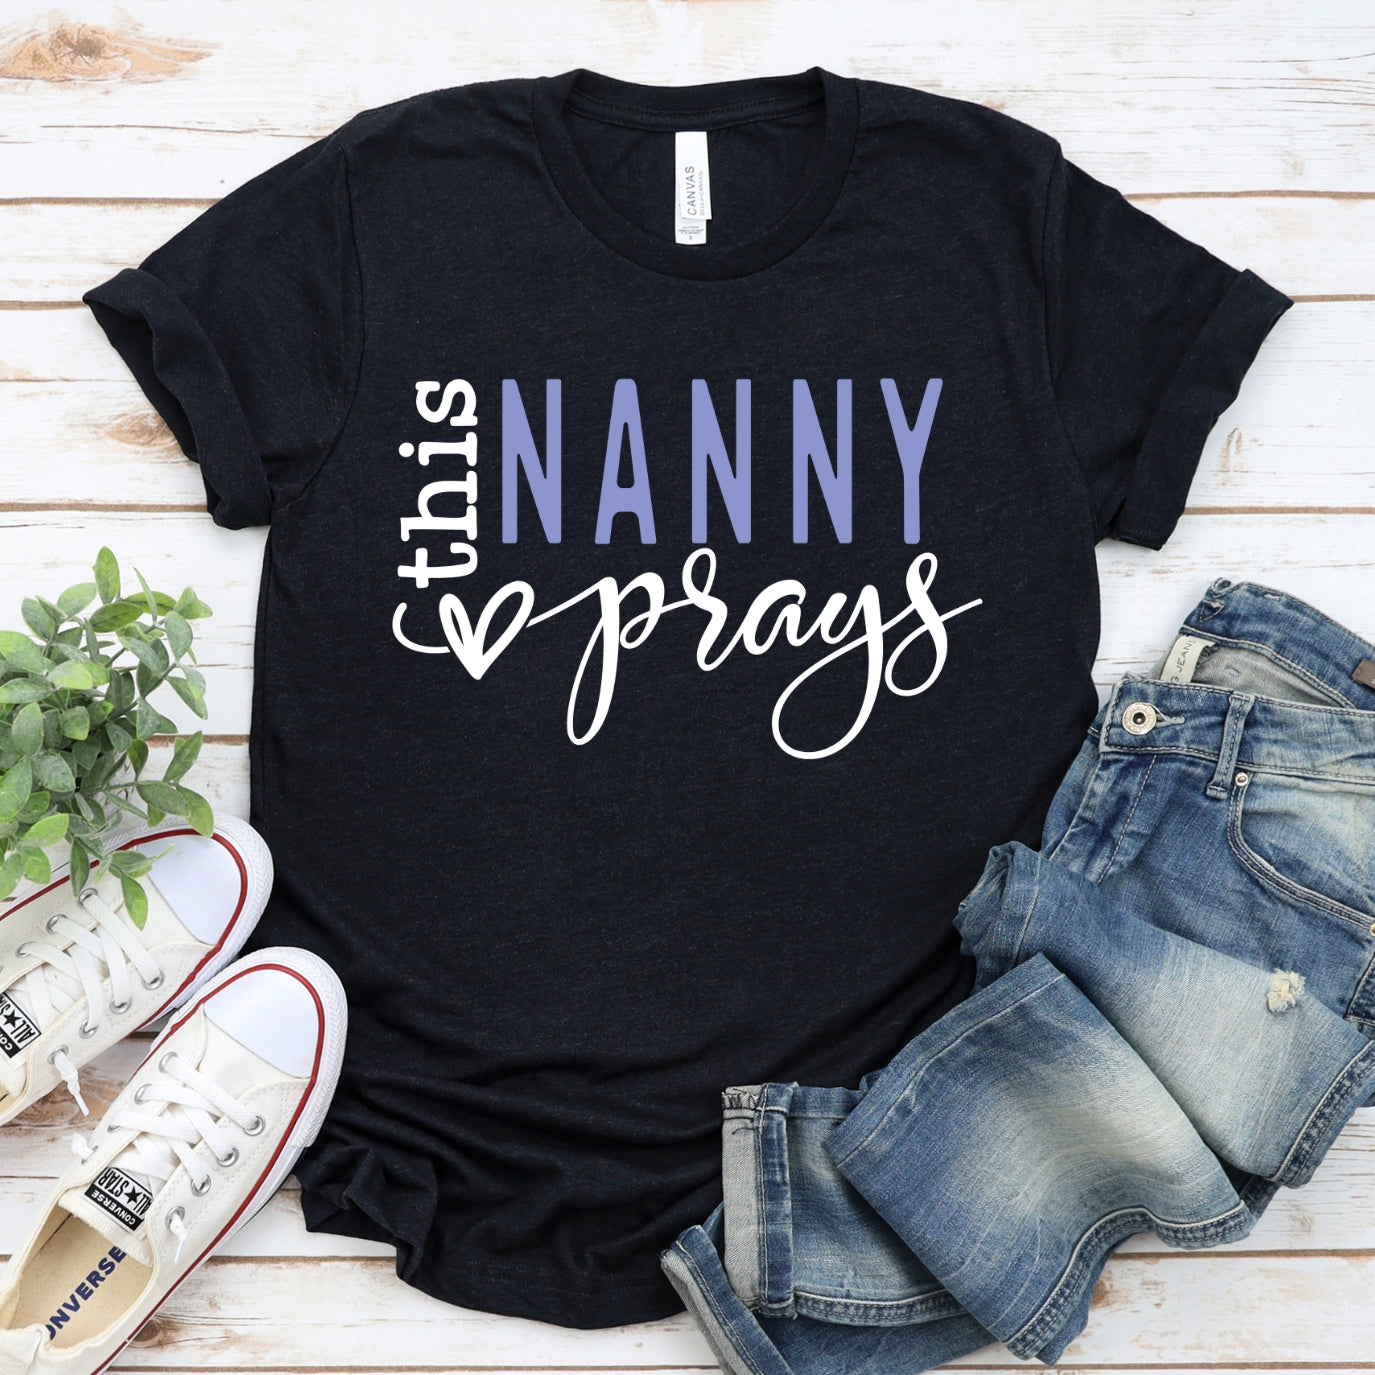 This Nanny Prays Women's T-Shirt